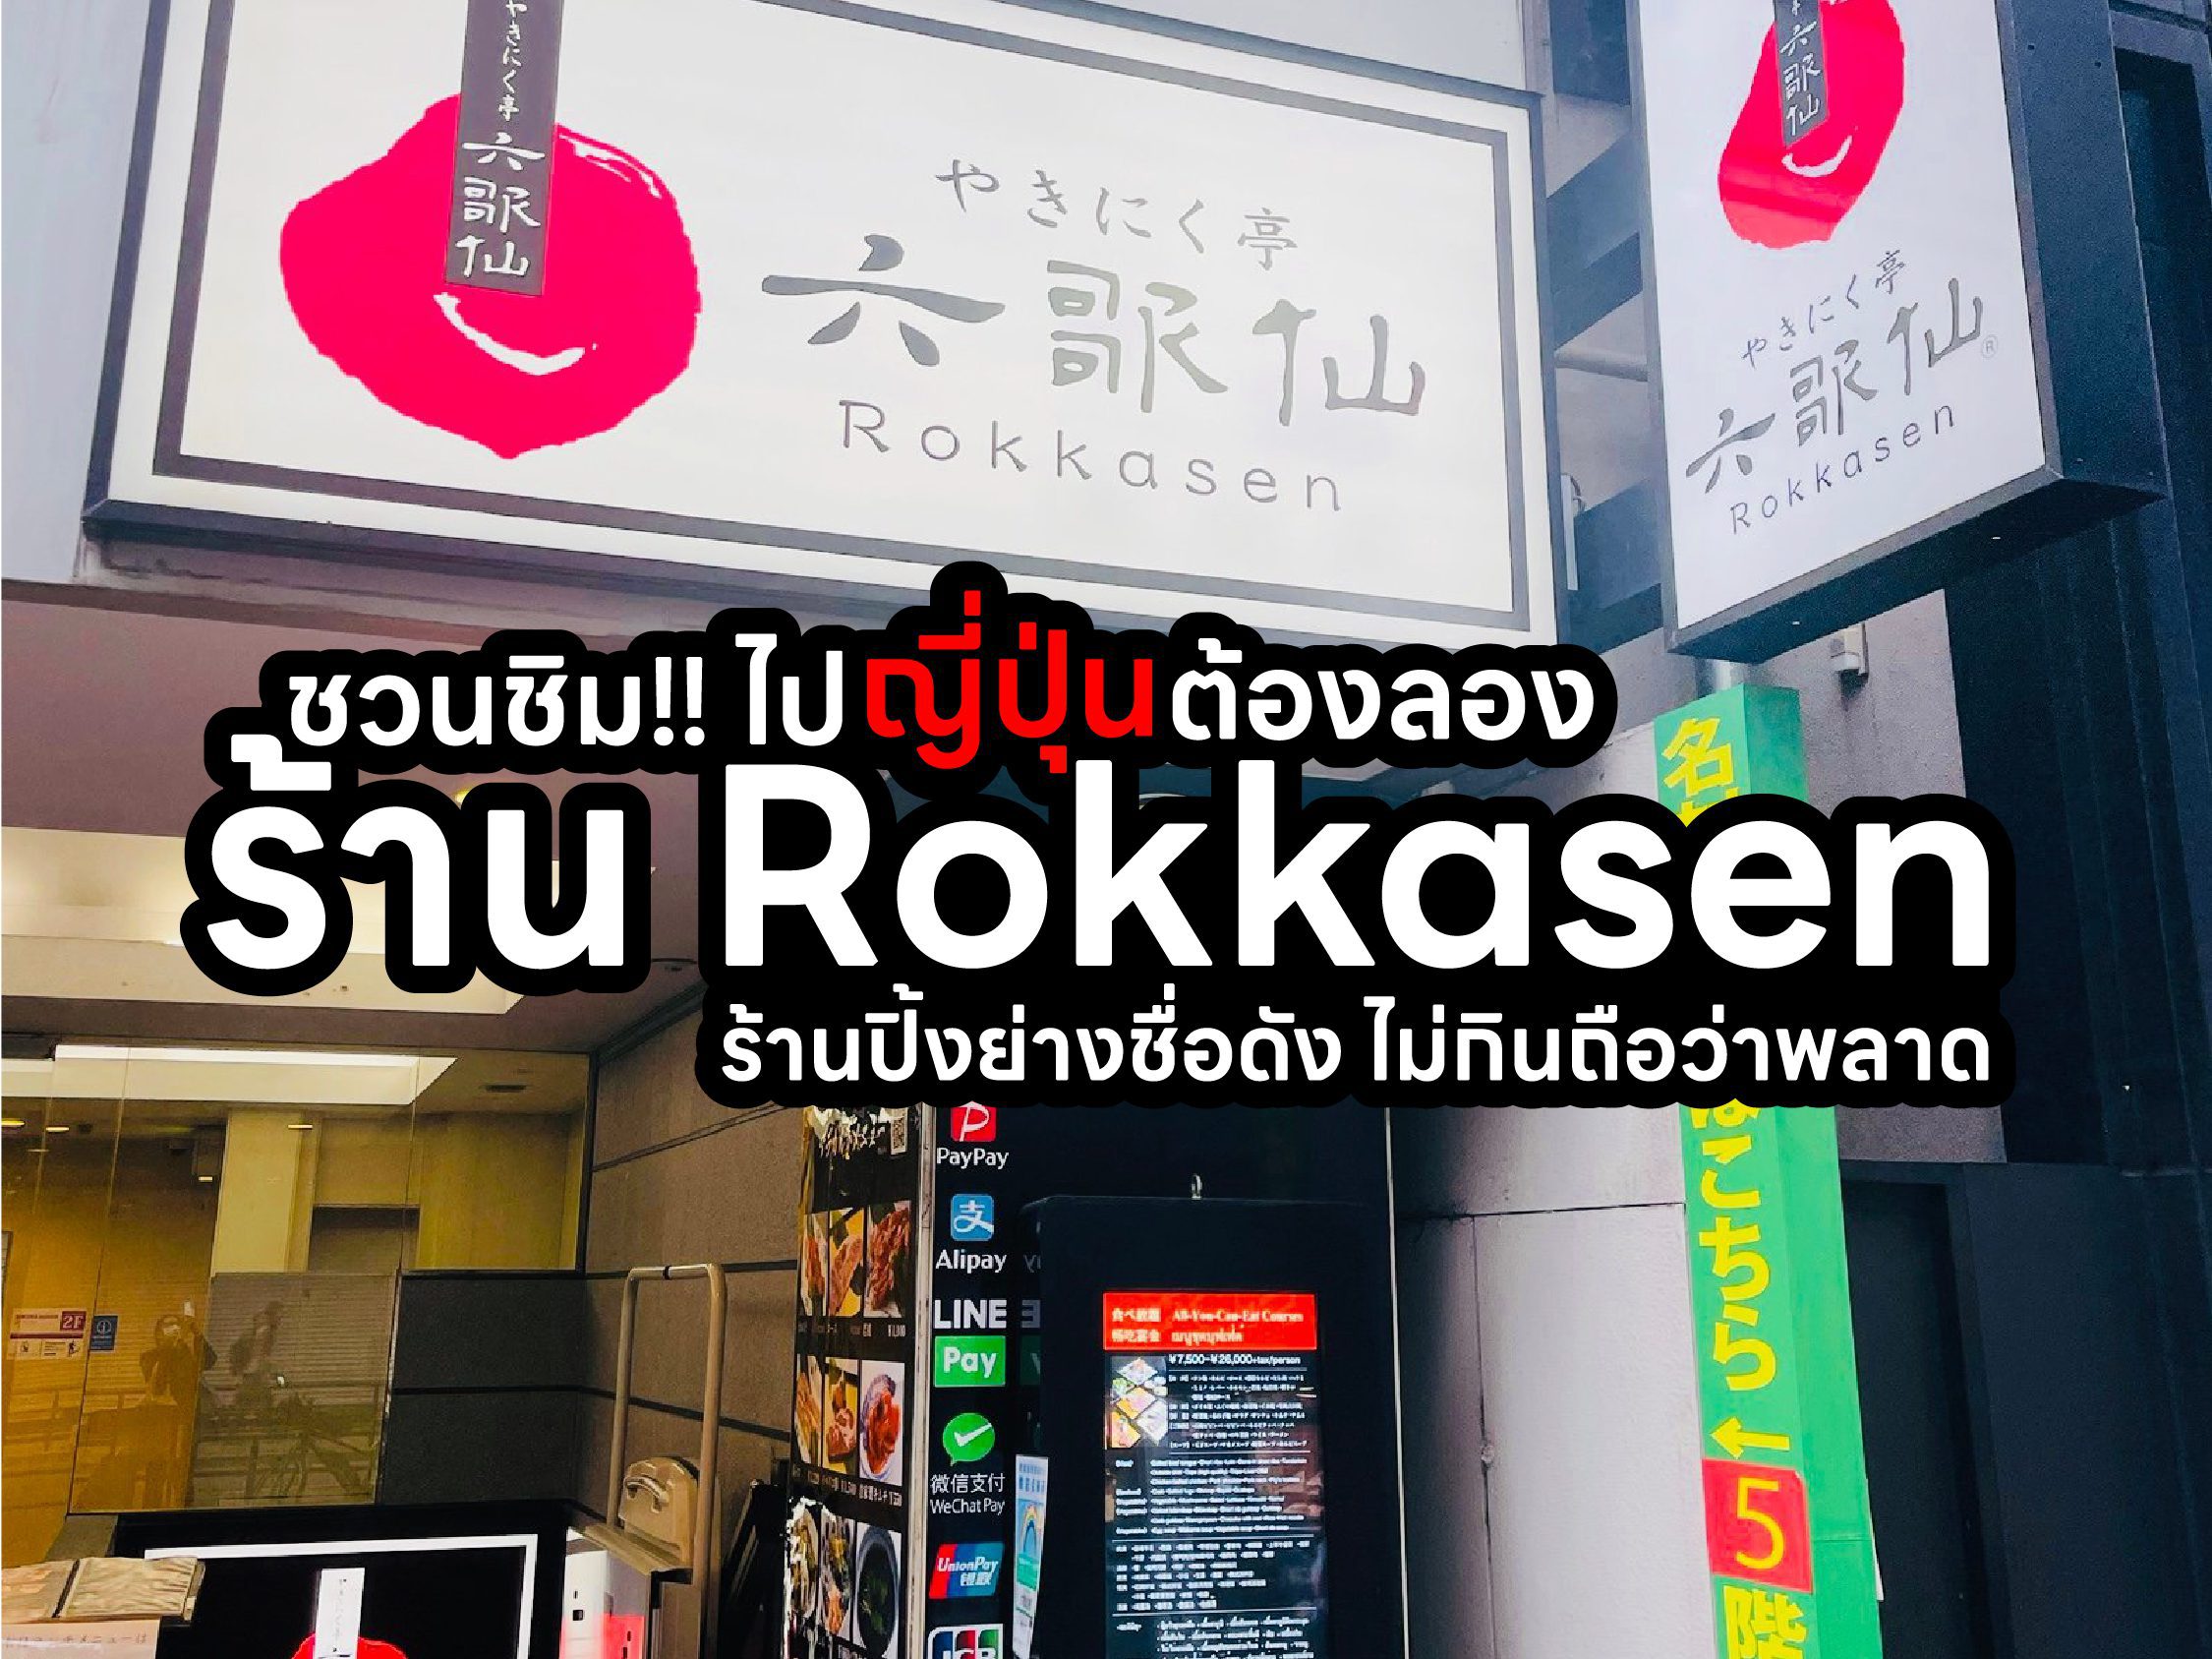 Rokkasen ร้านอาหารชื่อดังที่ญี่ปุ่น